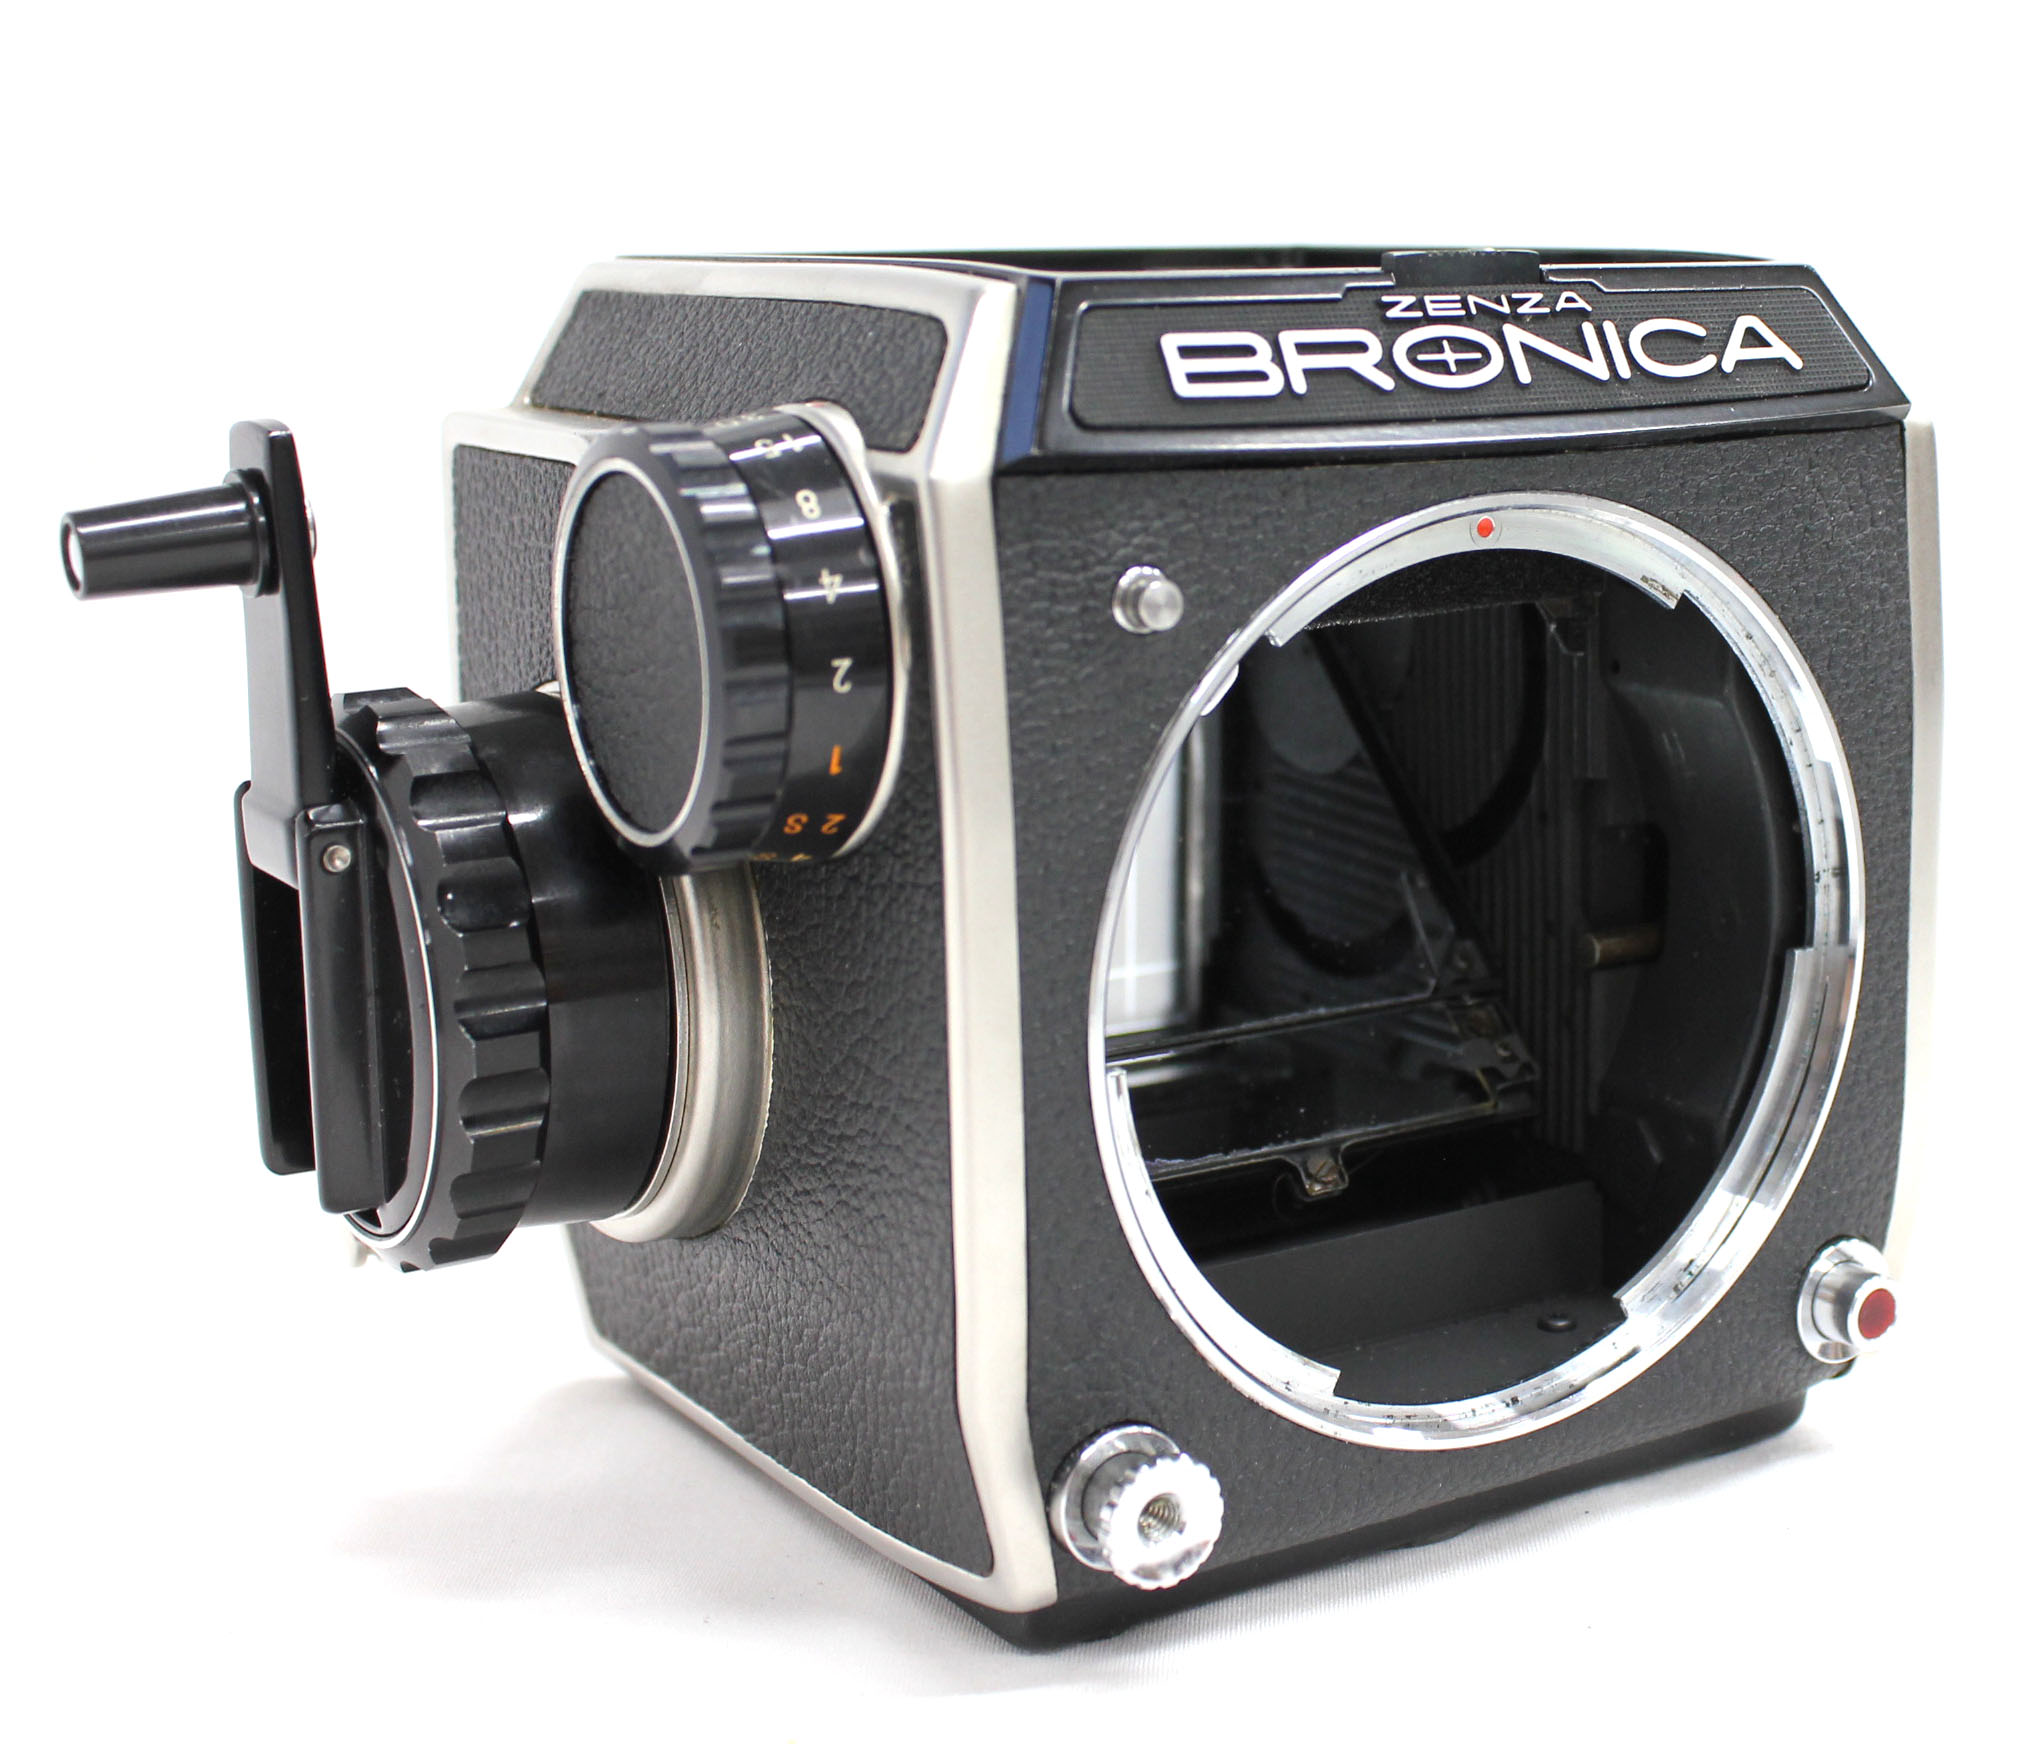  Zenza Bronica EC 6x6 Medium Format Camera w/ Nikkor-P 75mm F/2.8 Lens from Japan Photo 9